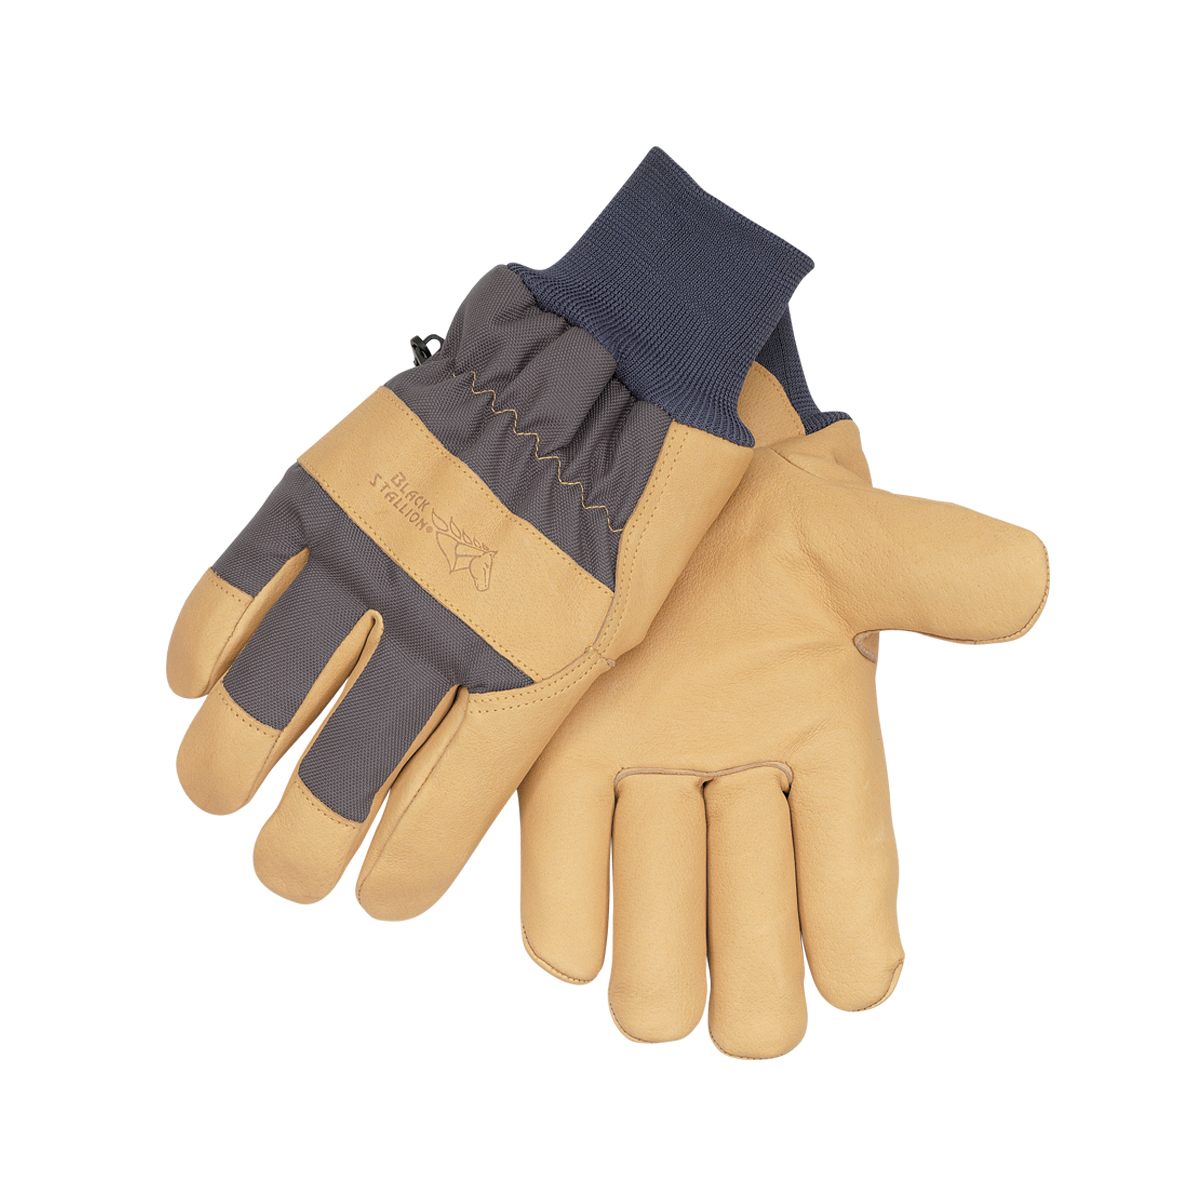 Revco Black Stallion Grain Pigskin Impactnylon Multiblend Insulated Leather Palm Work Gloves #6LPK for sale online at Welders